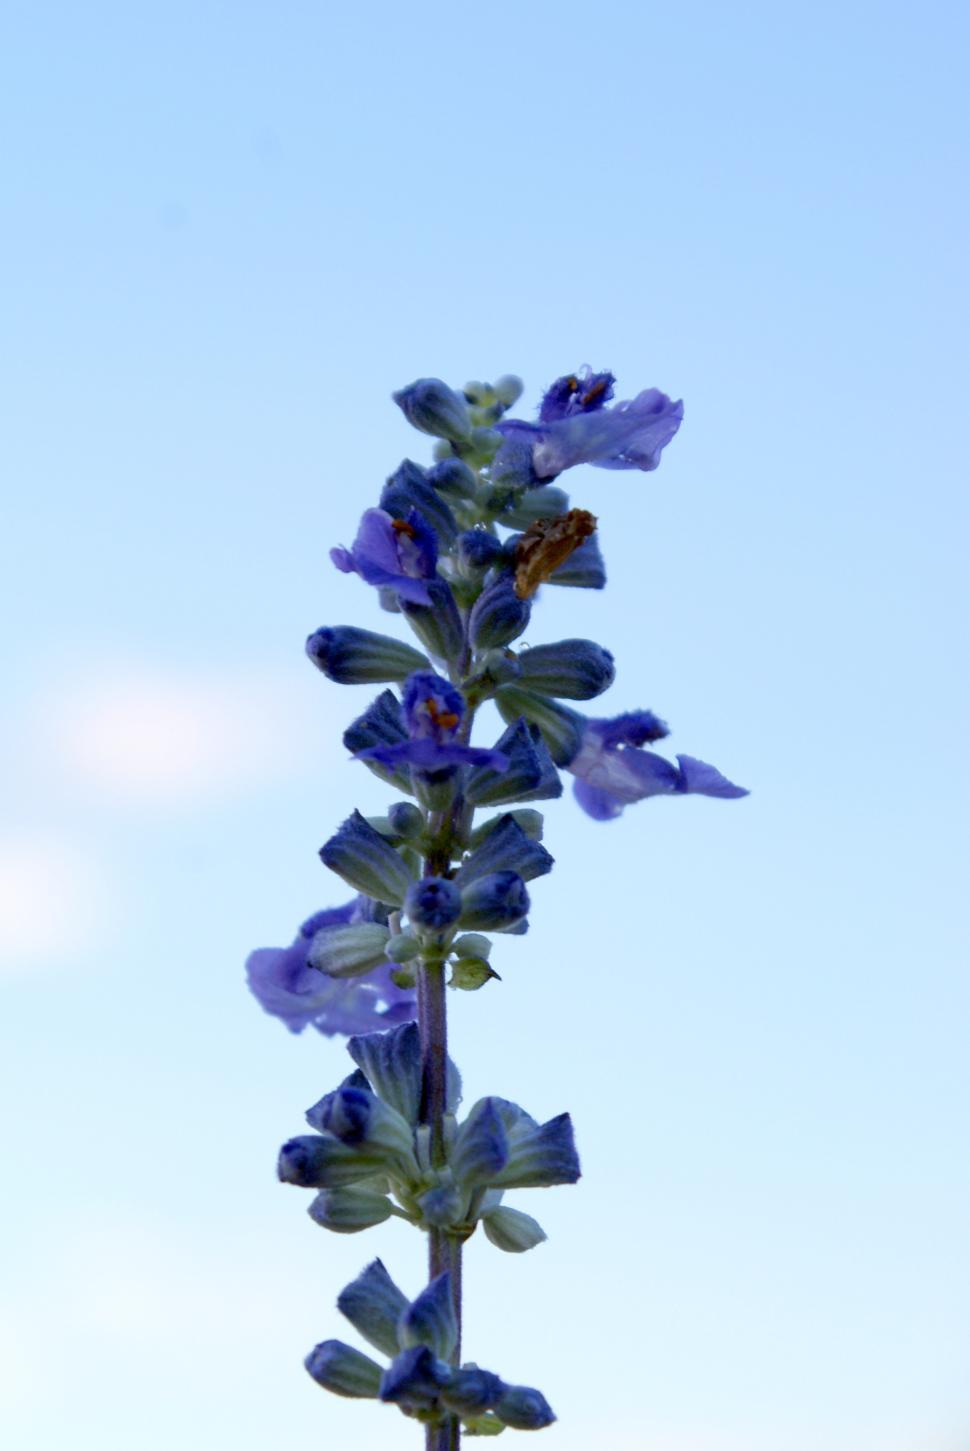 Free Image of Blue flowersand blue sky. 